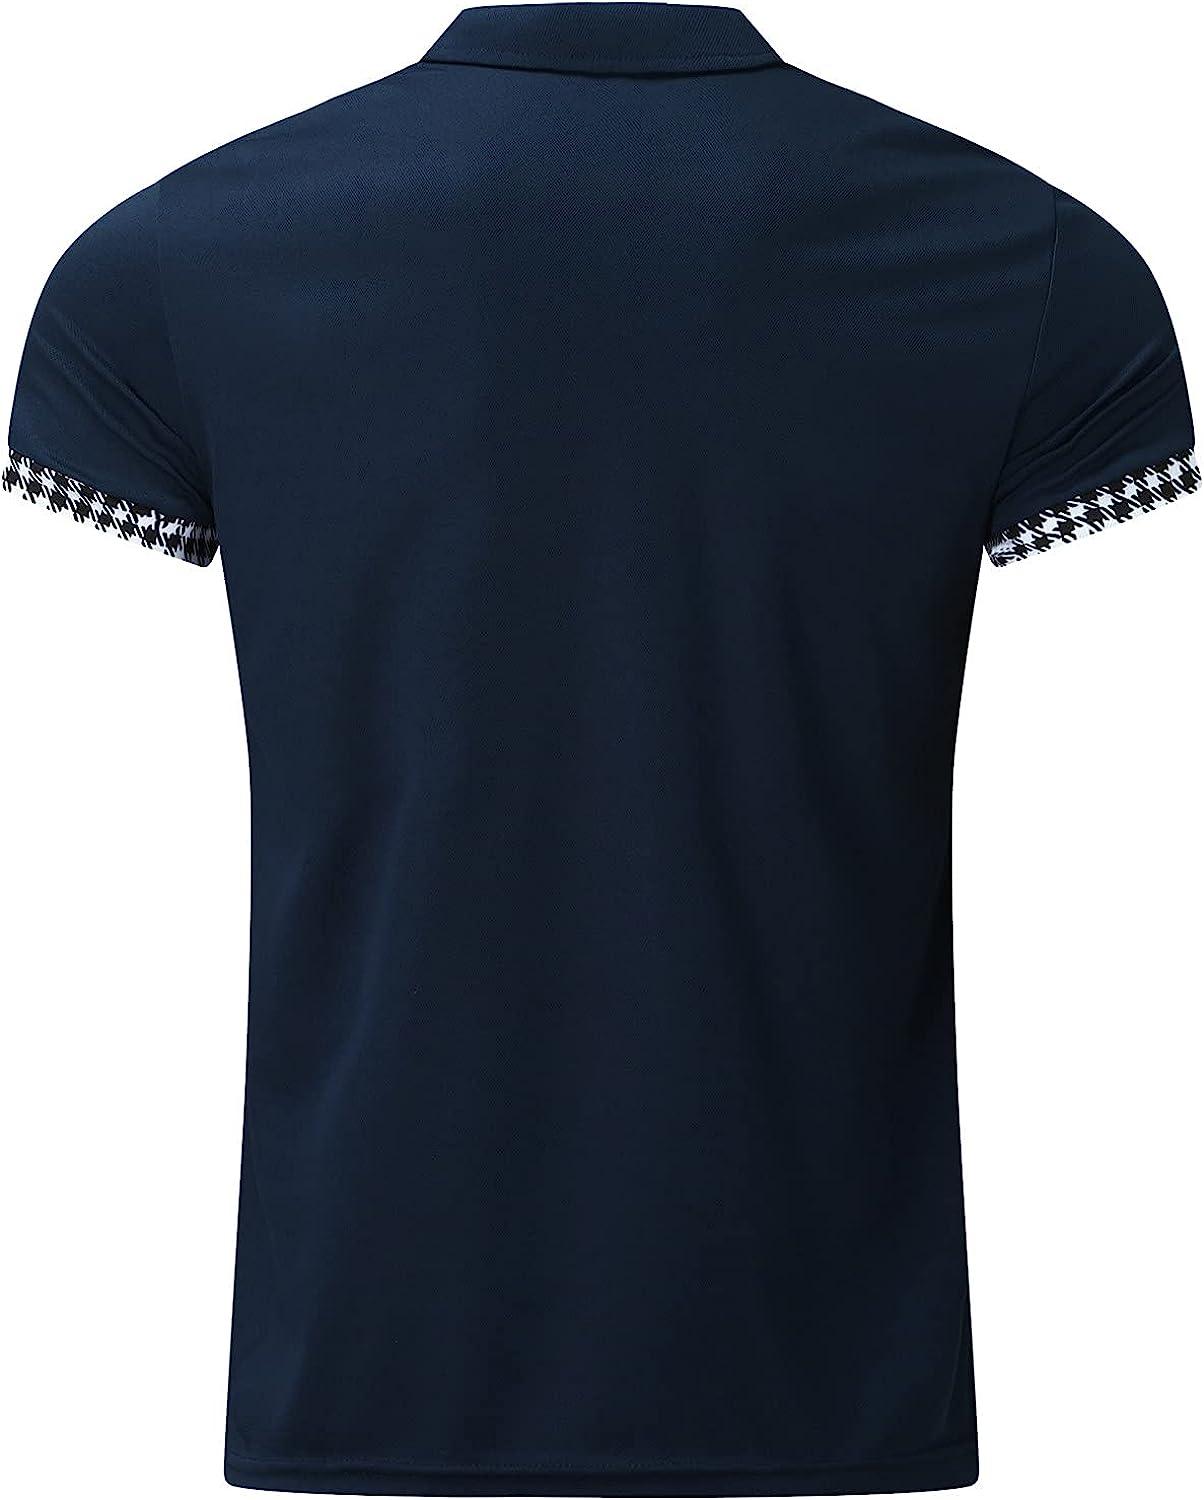 Summer Men'S T-Shirt Hip Hop 3d Baseball Print Outdoor Sports Top T-Shirt  Fashion Customized Fitness Quick Cool Dry Short Sleeve